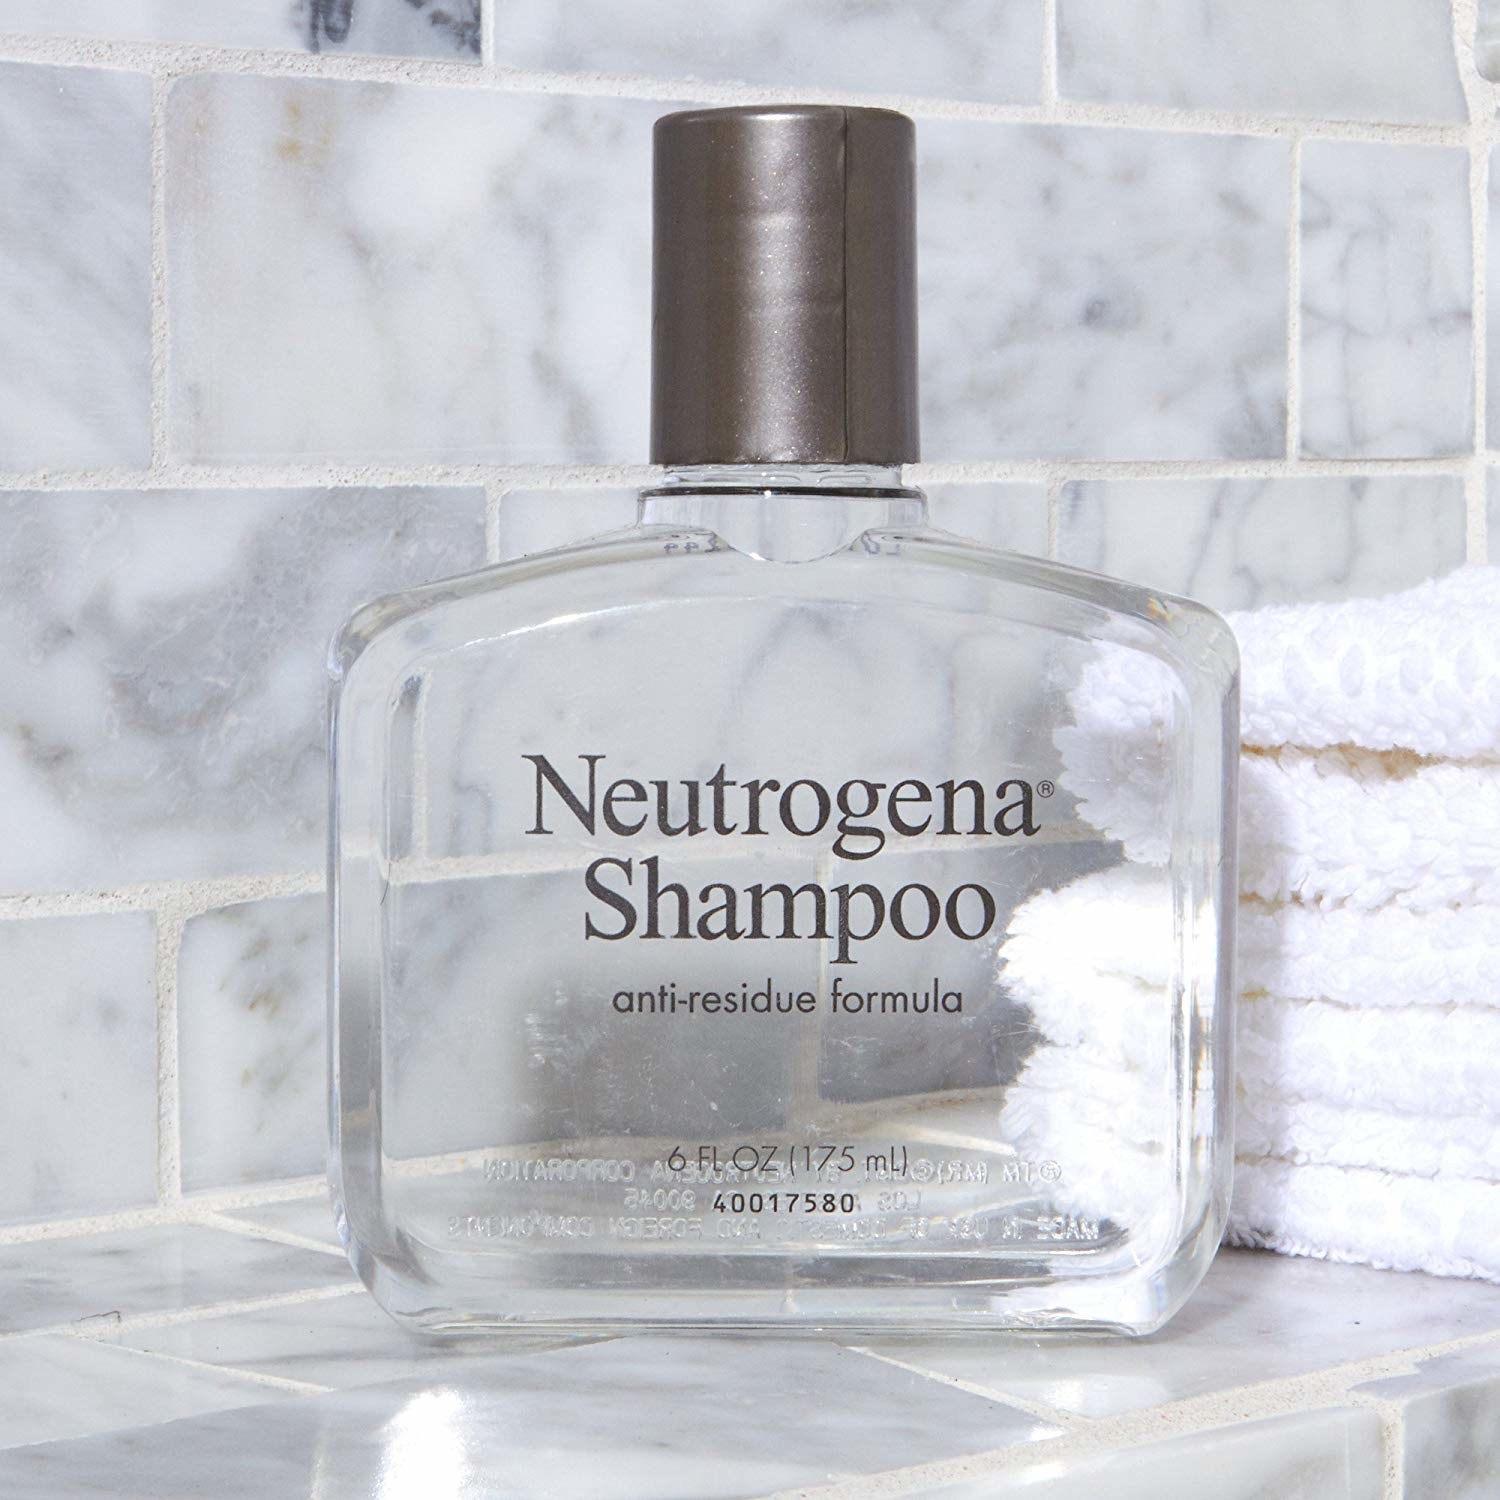 The bottle of shampoo